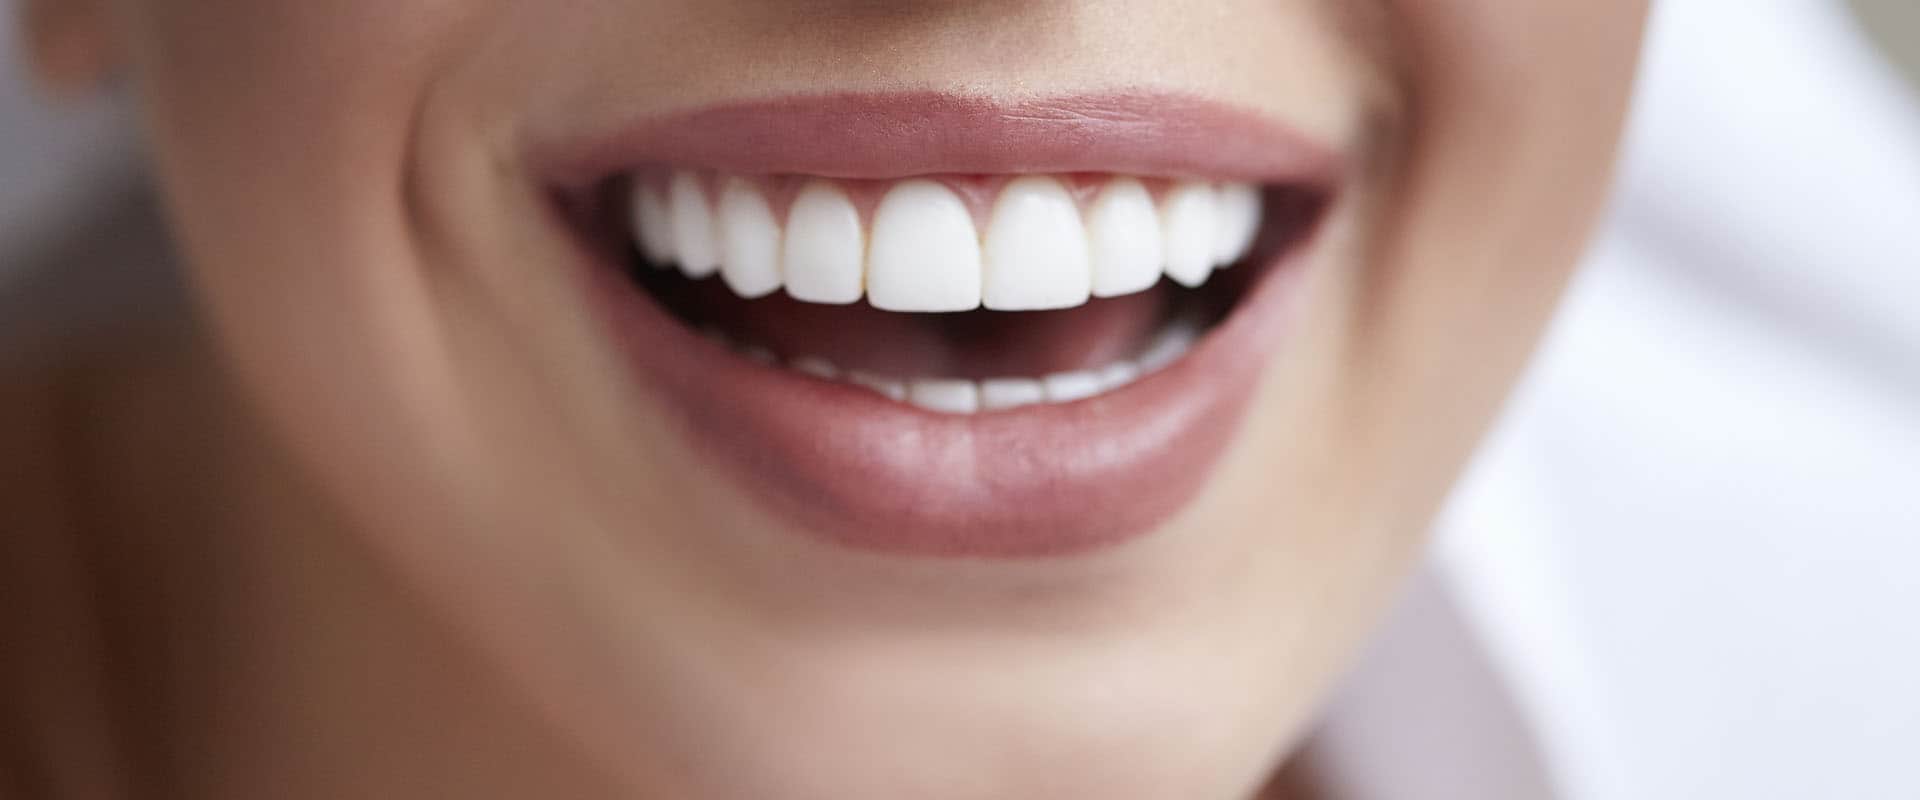 Can Getting Veneers Affect Oral Hygiene?